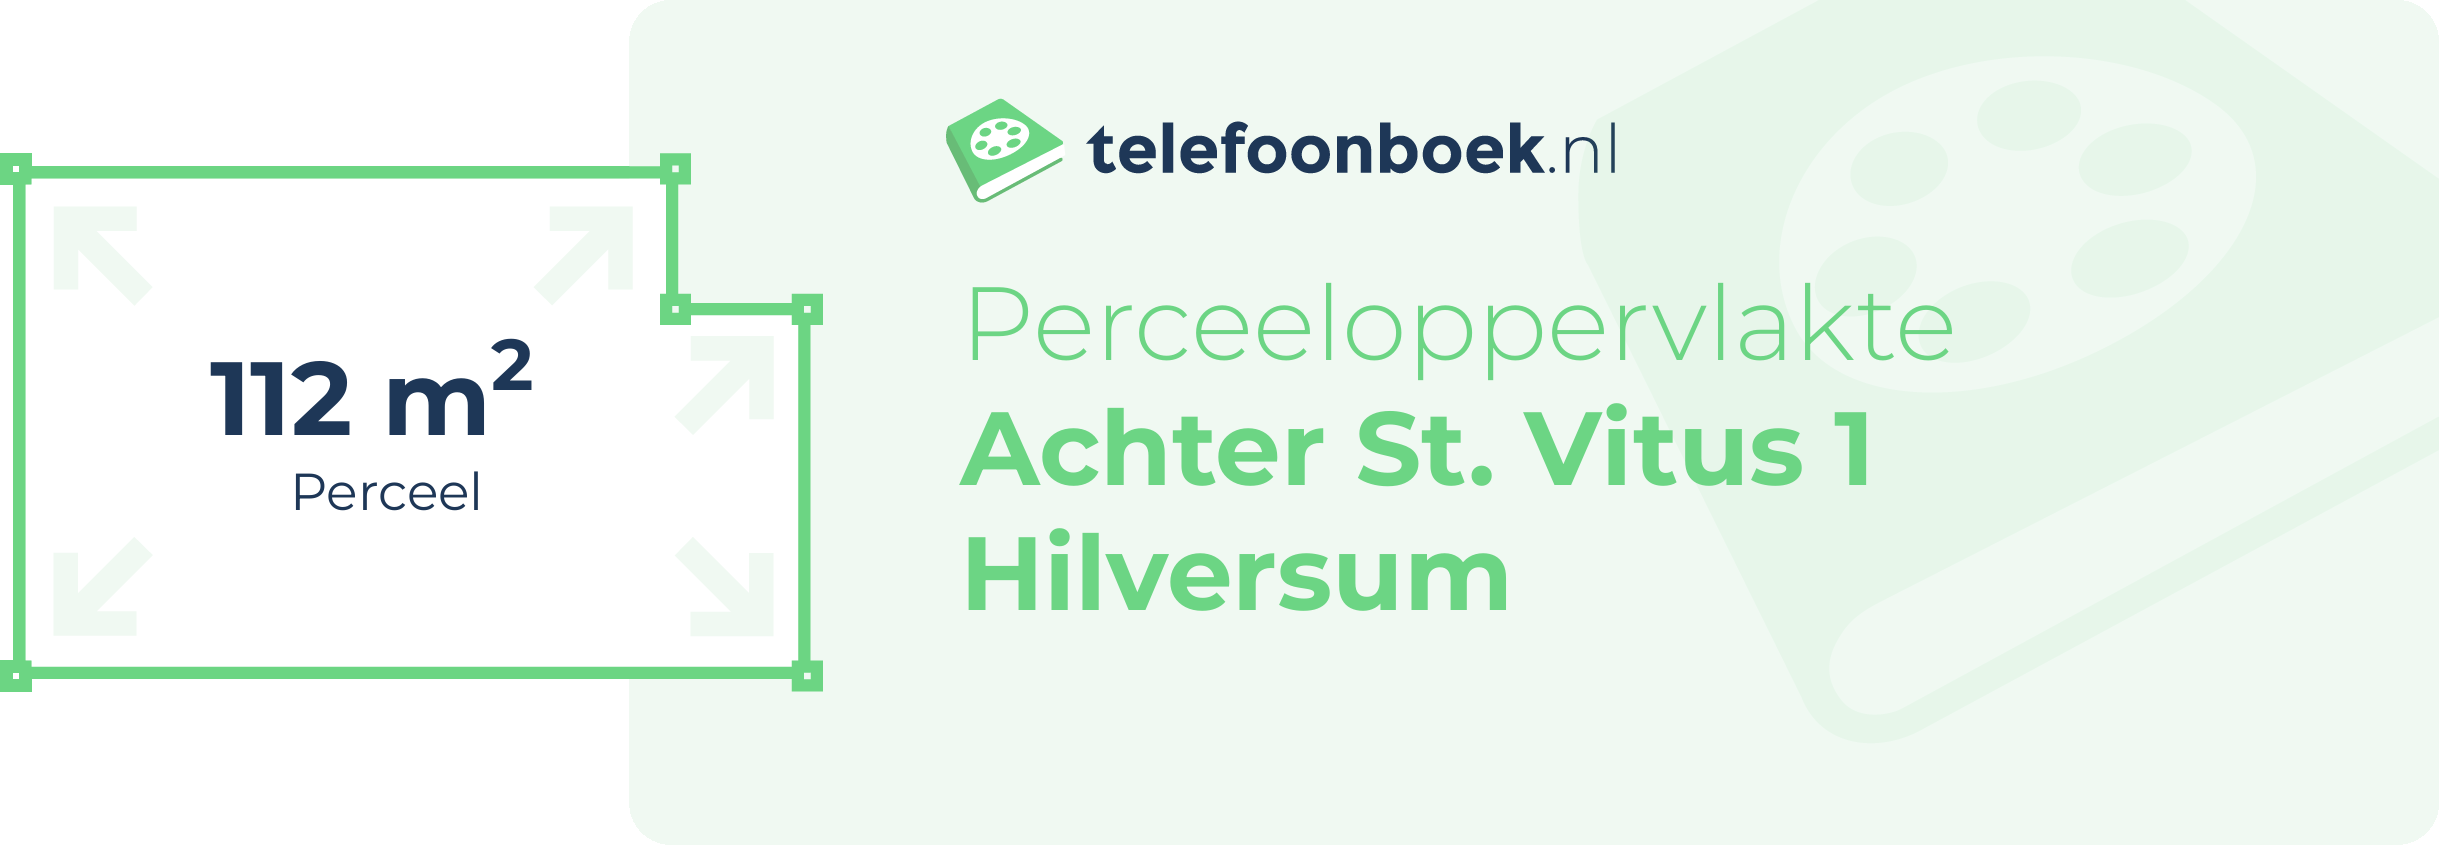 Perceeloppervlakte Achter St. Vitus 1 Hilversum